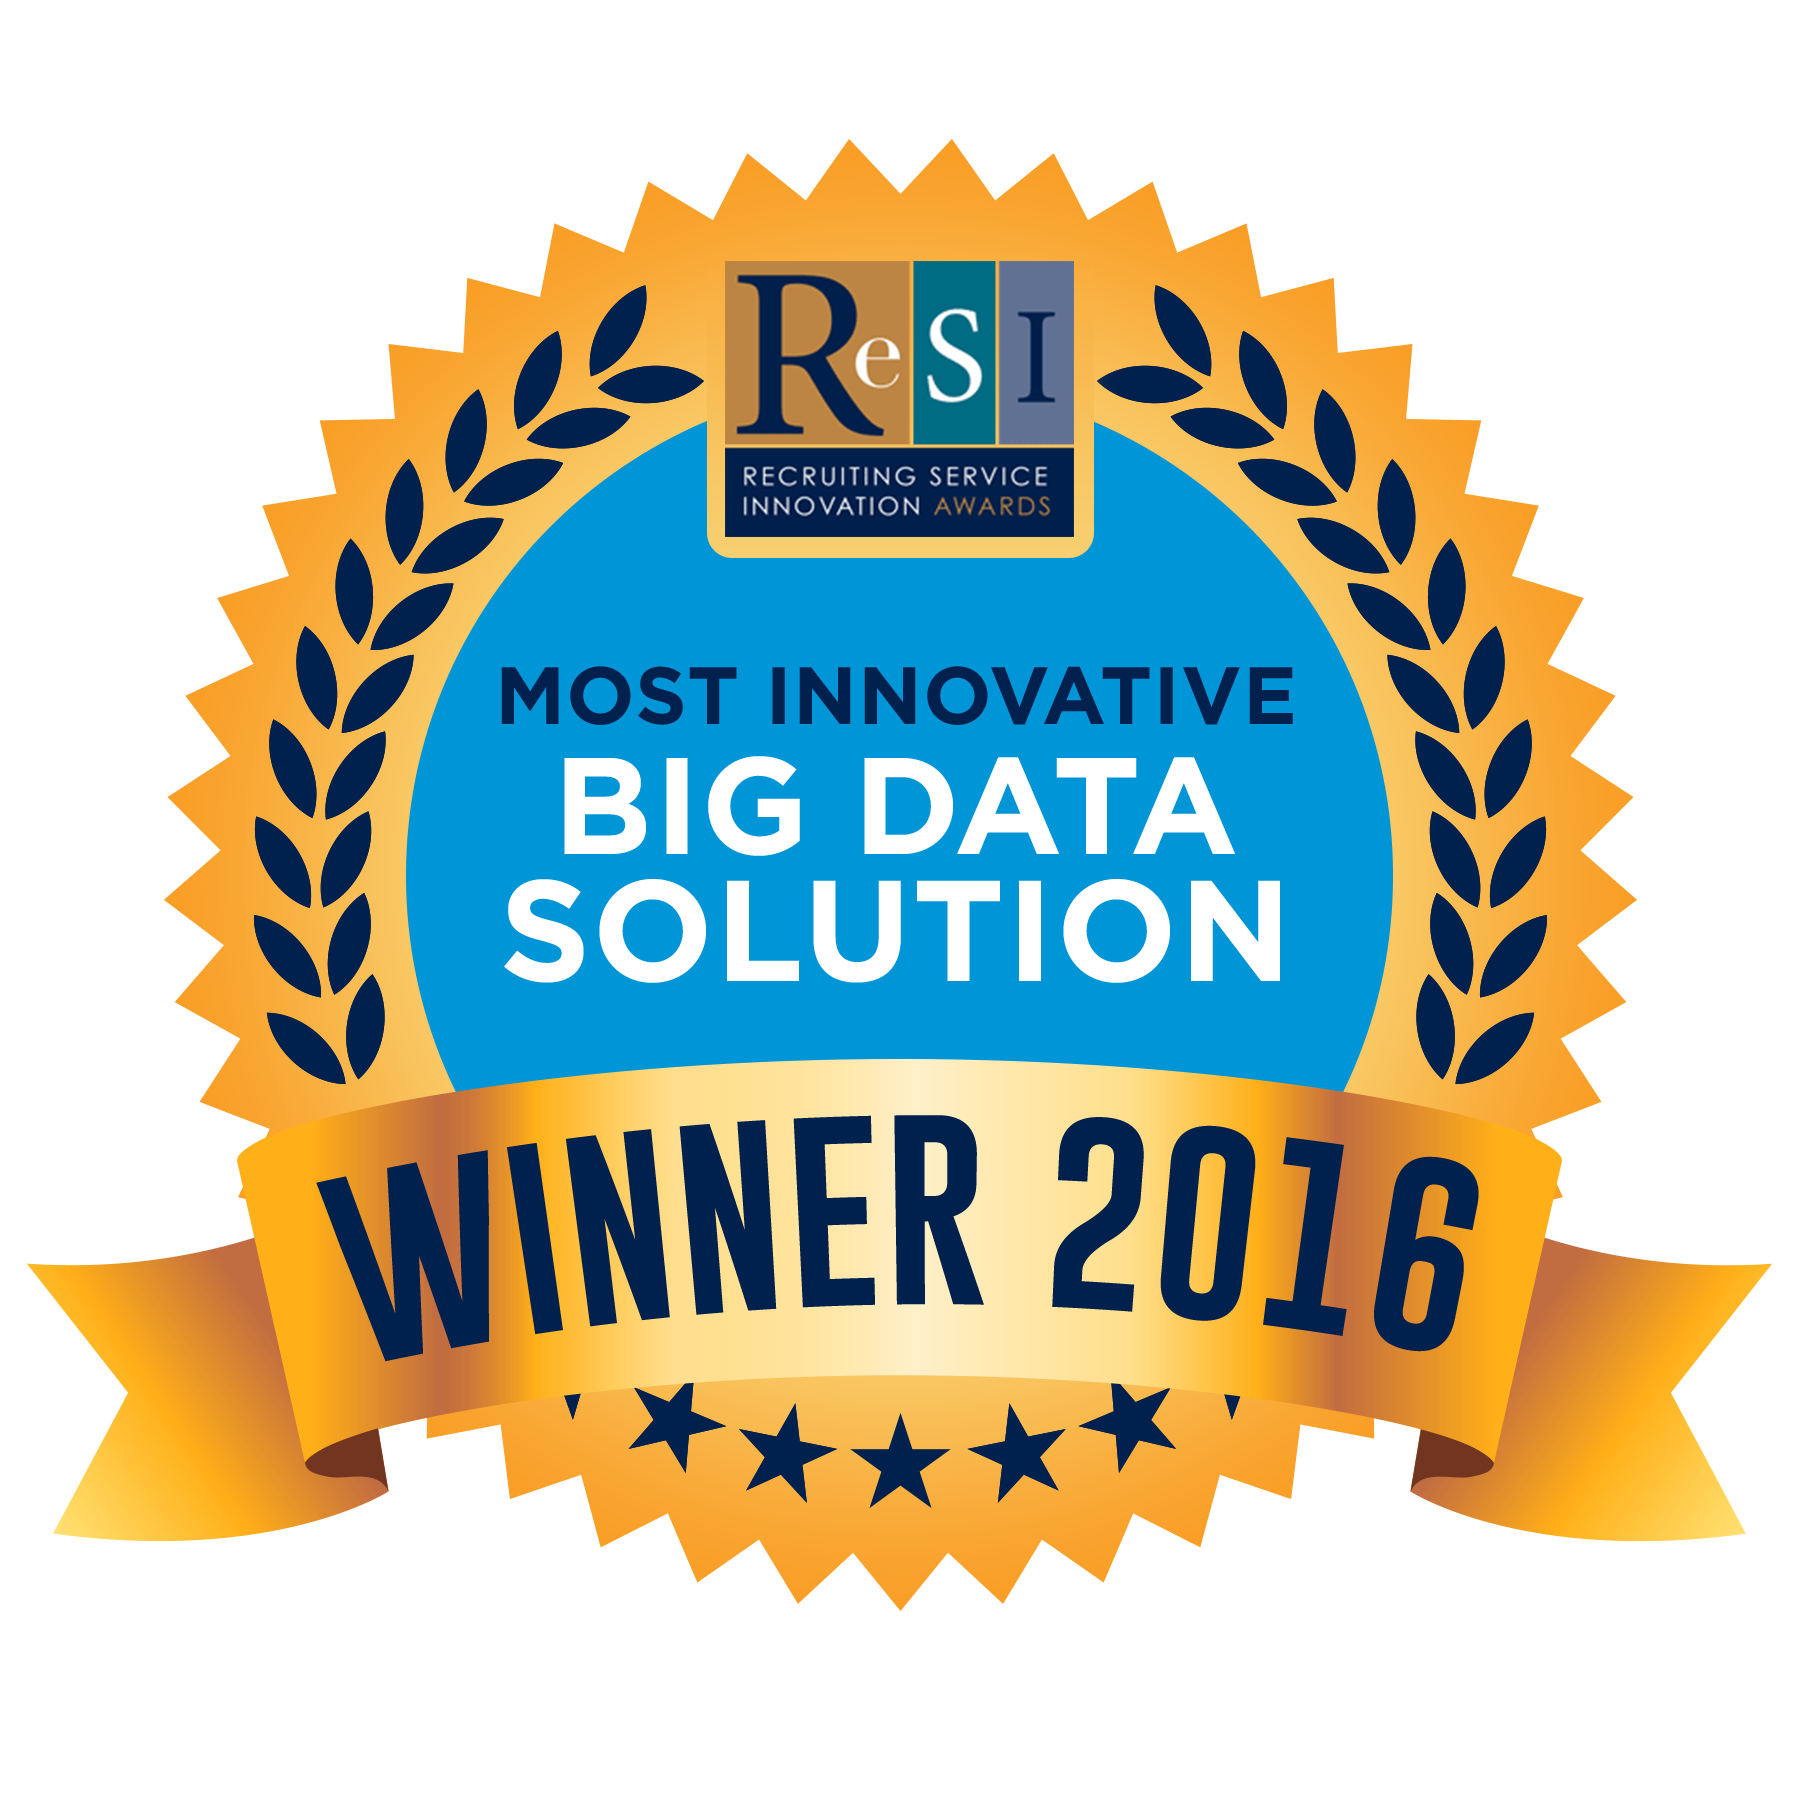 2016 Resi Award for Most Innovative Big Data Solution